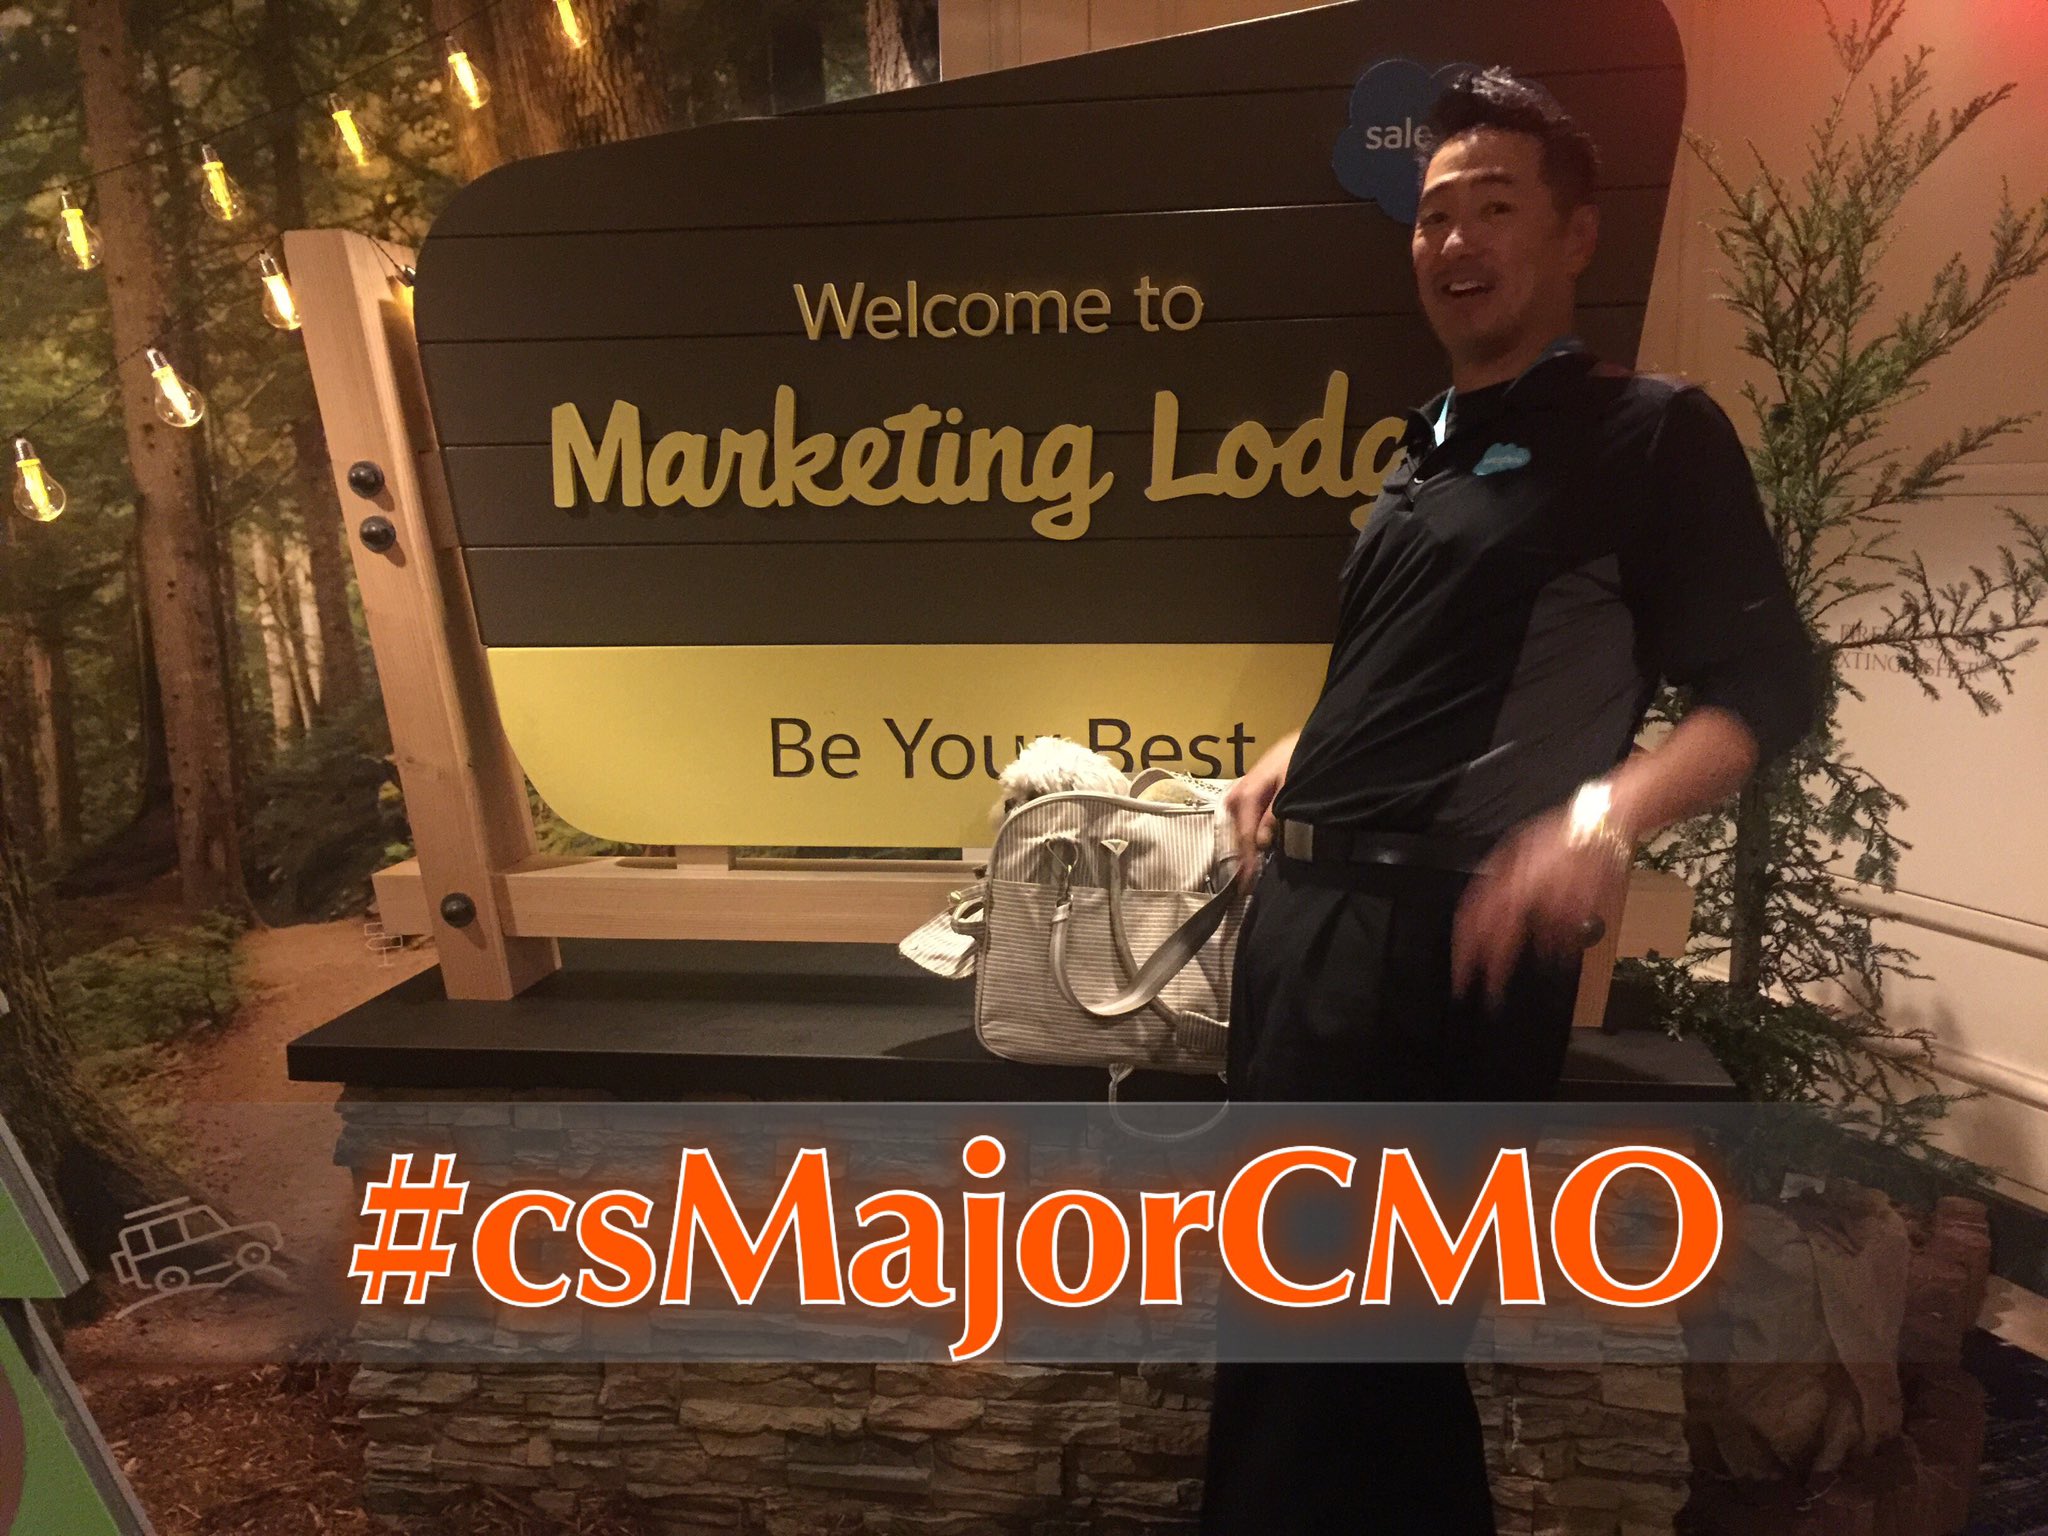 CS major chief-marketing-officer #csMajorCMO, Larry Chiang